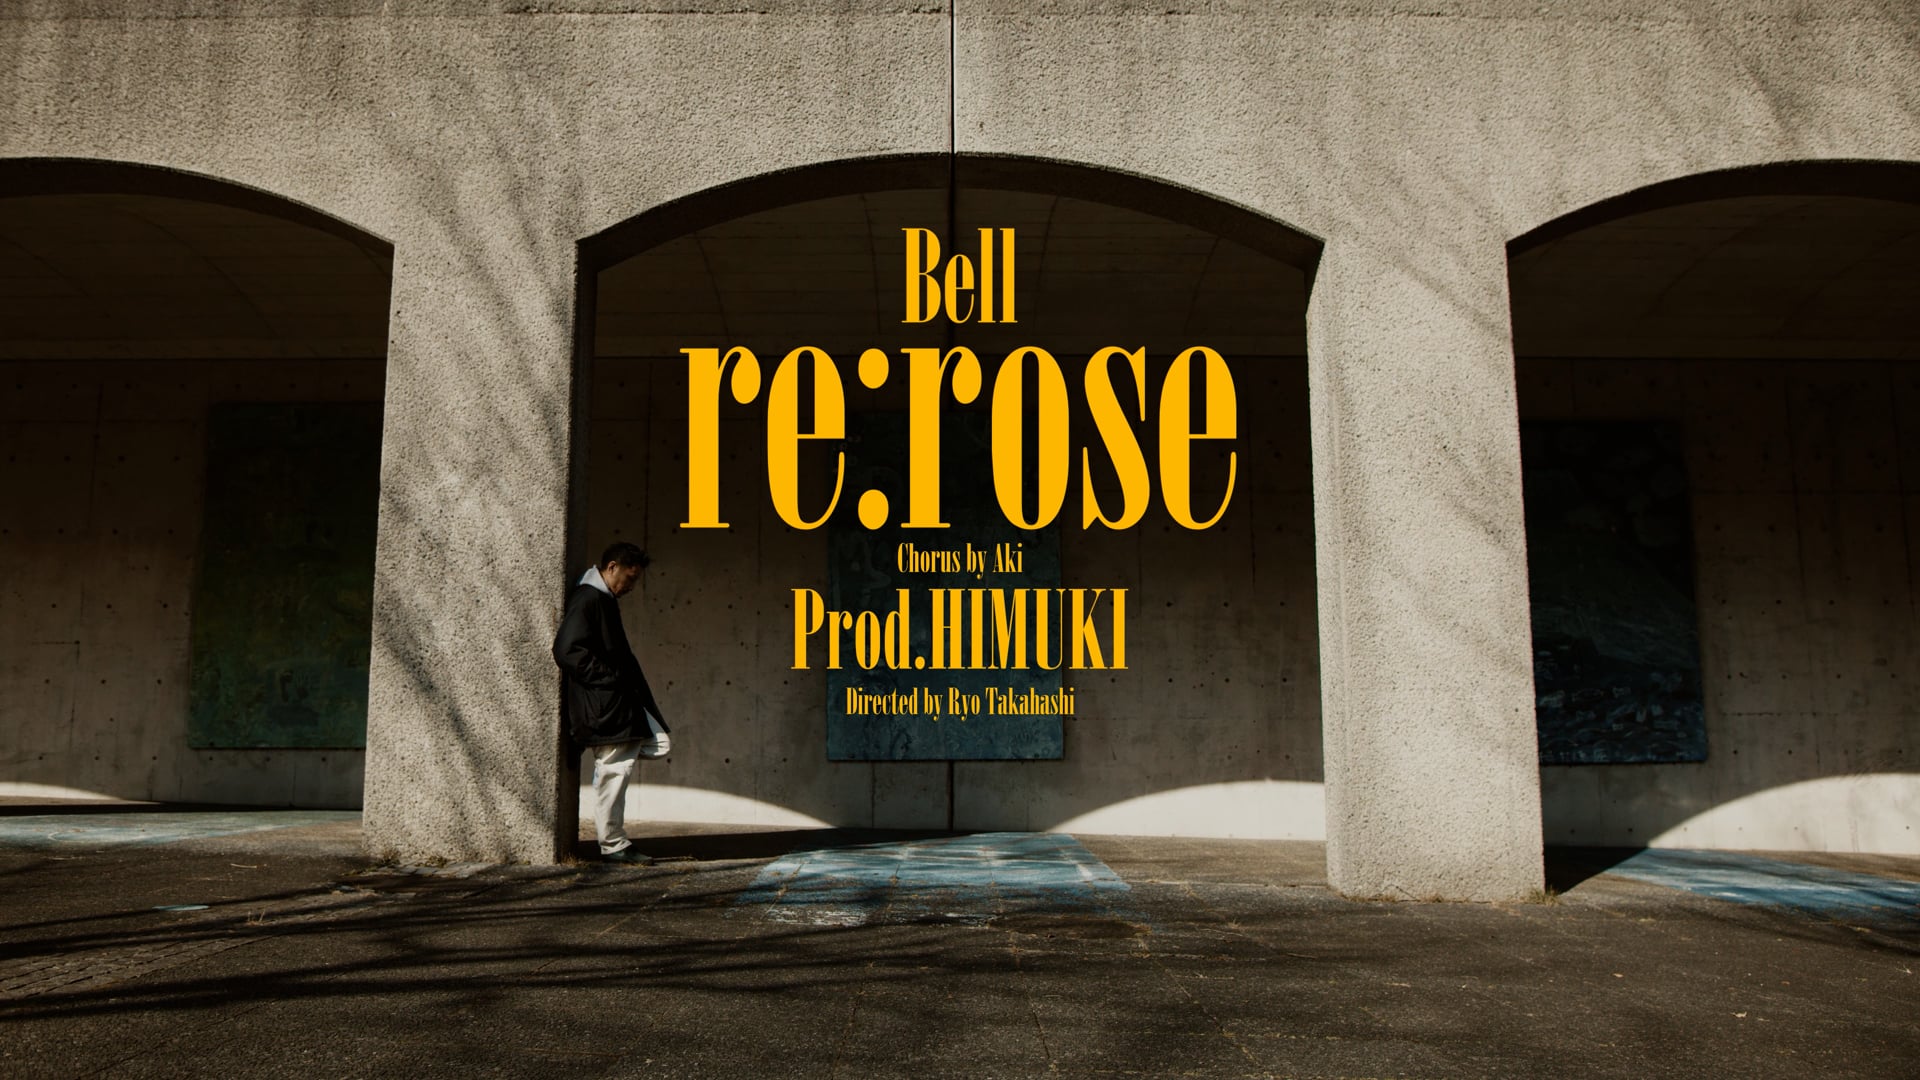 Bell - re:rose (Chorus by Aki)